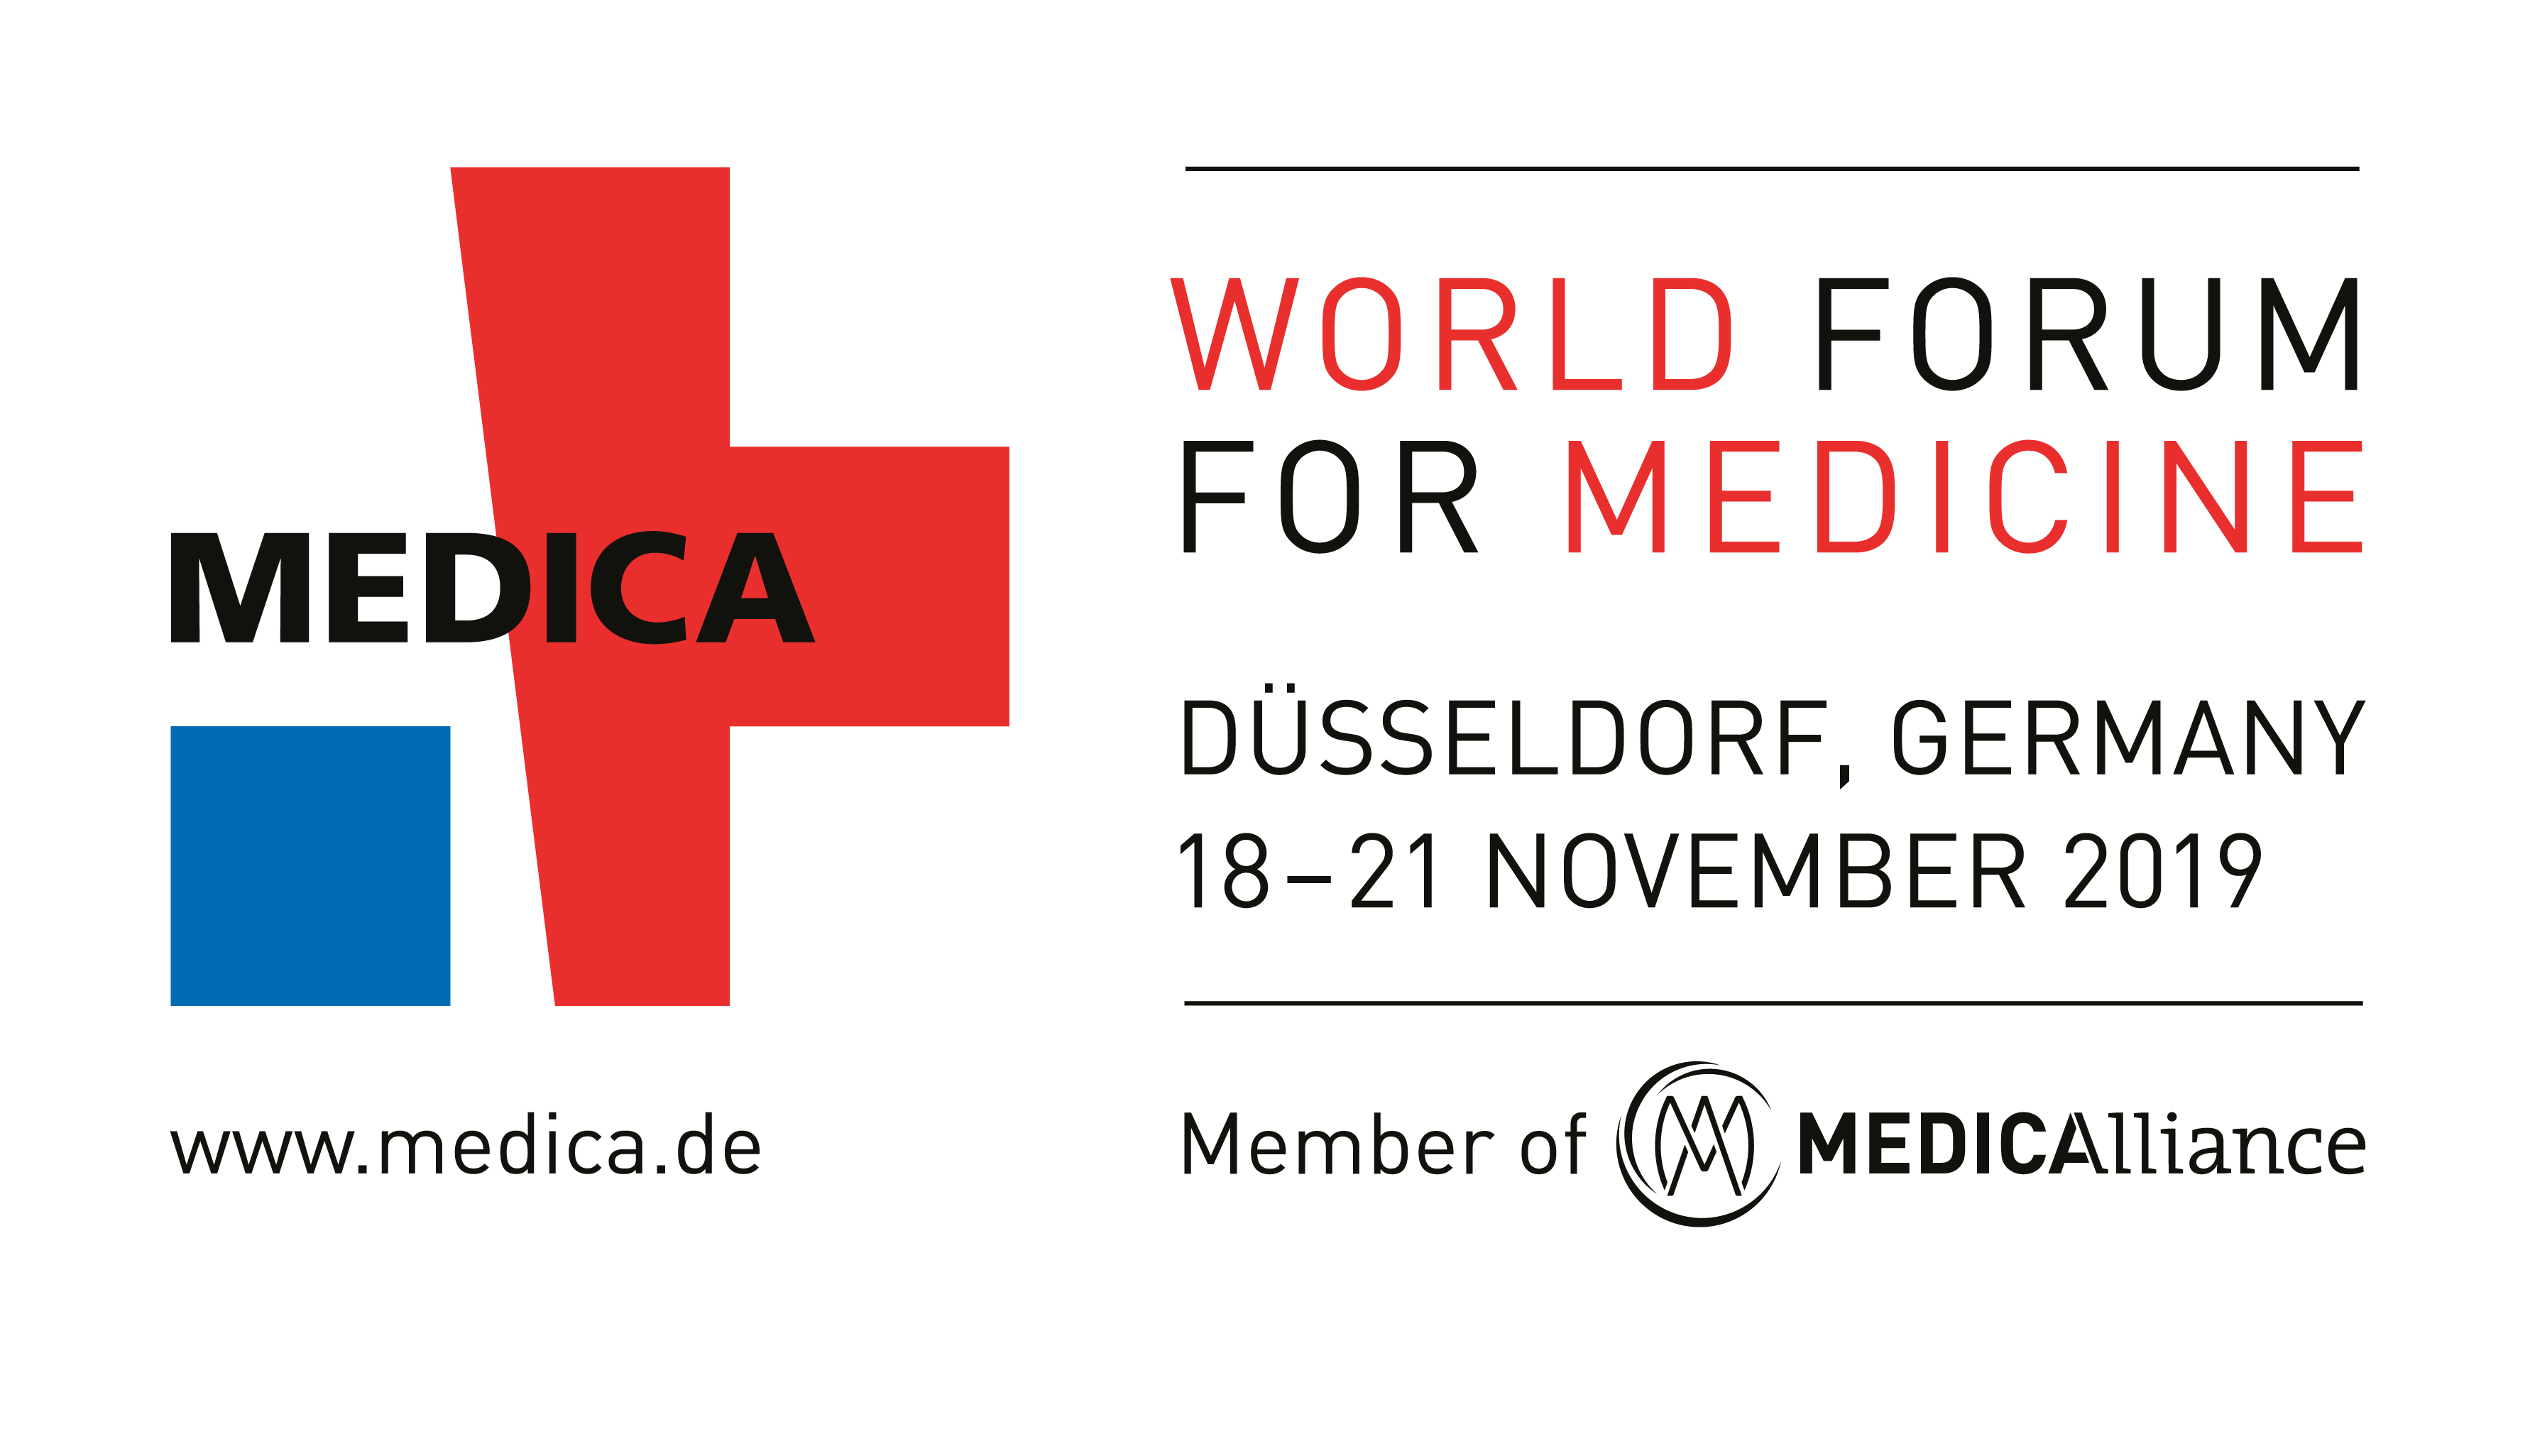 World forum for medicine logo